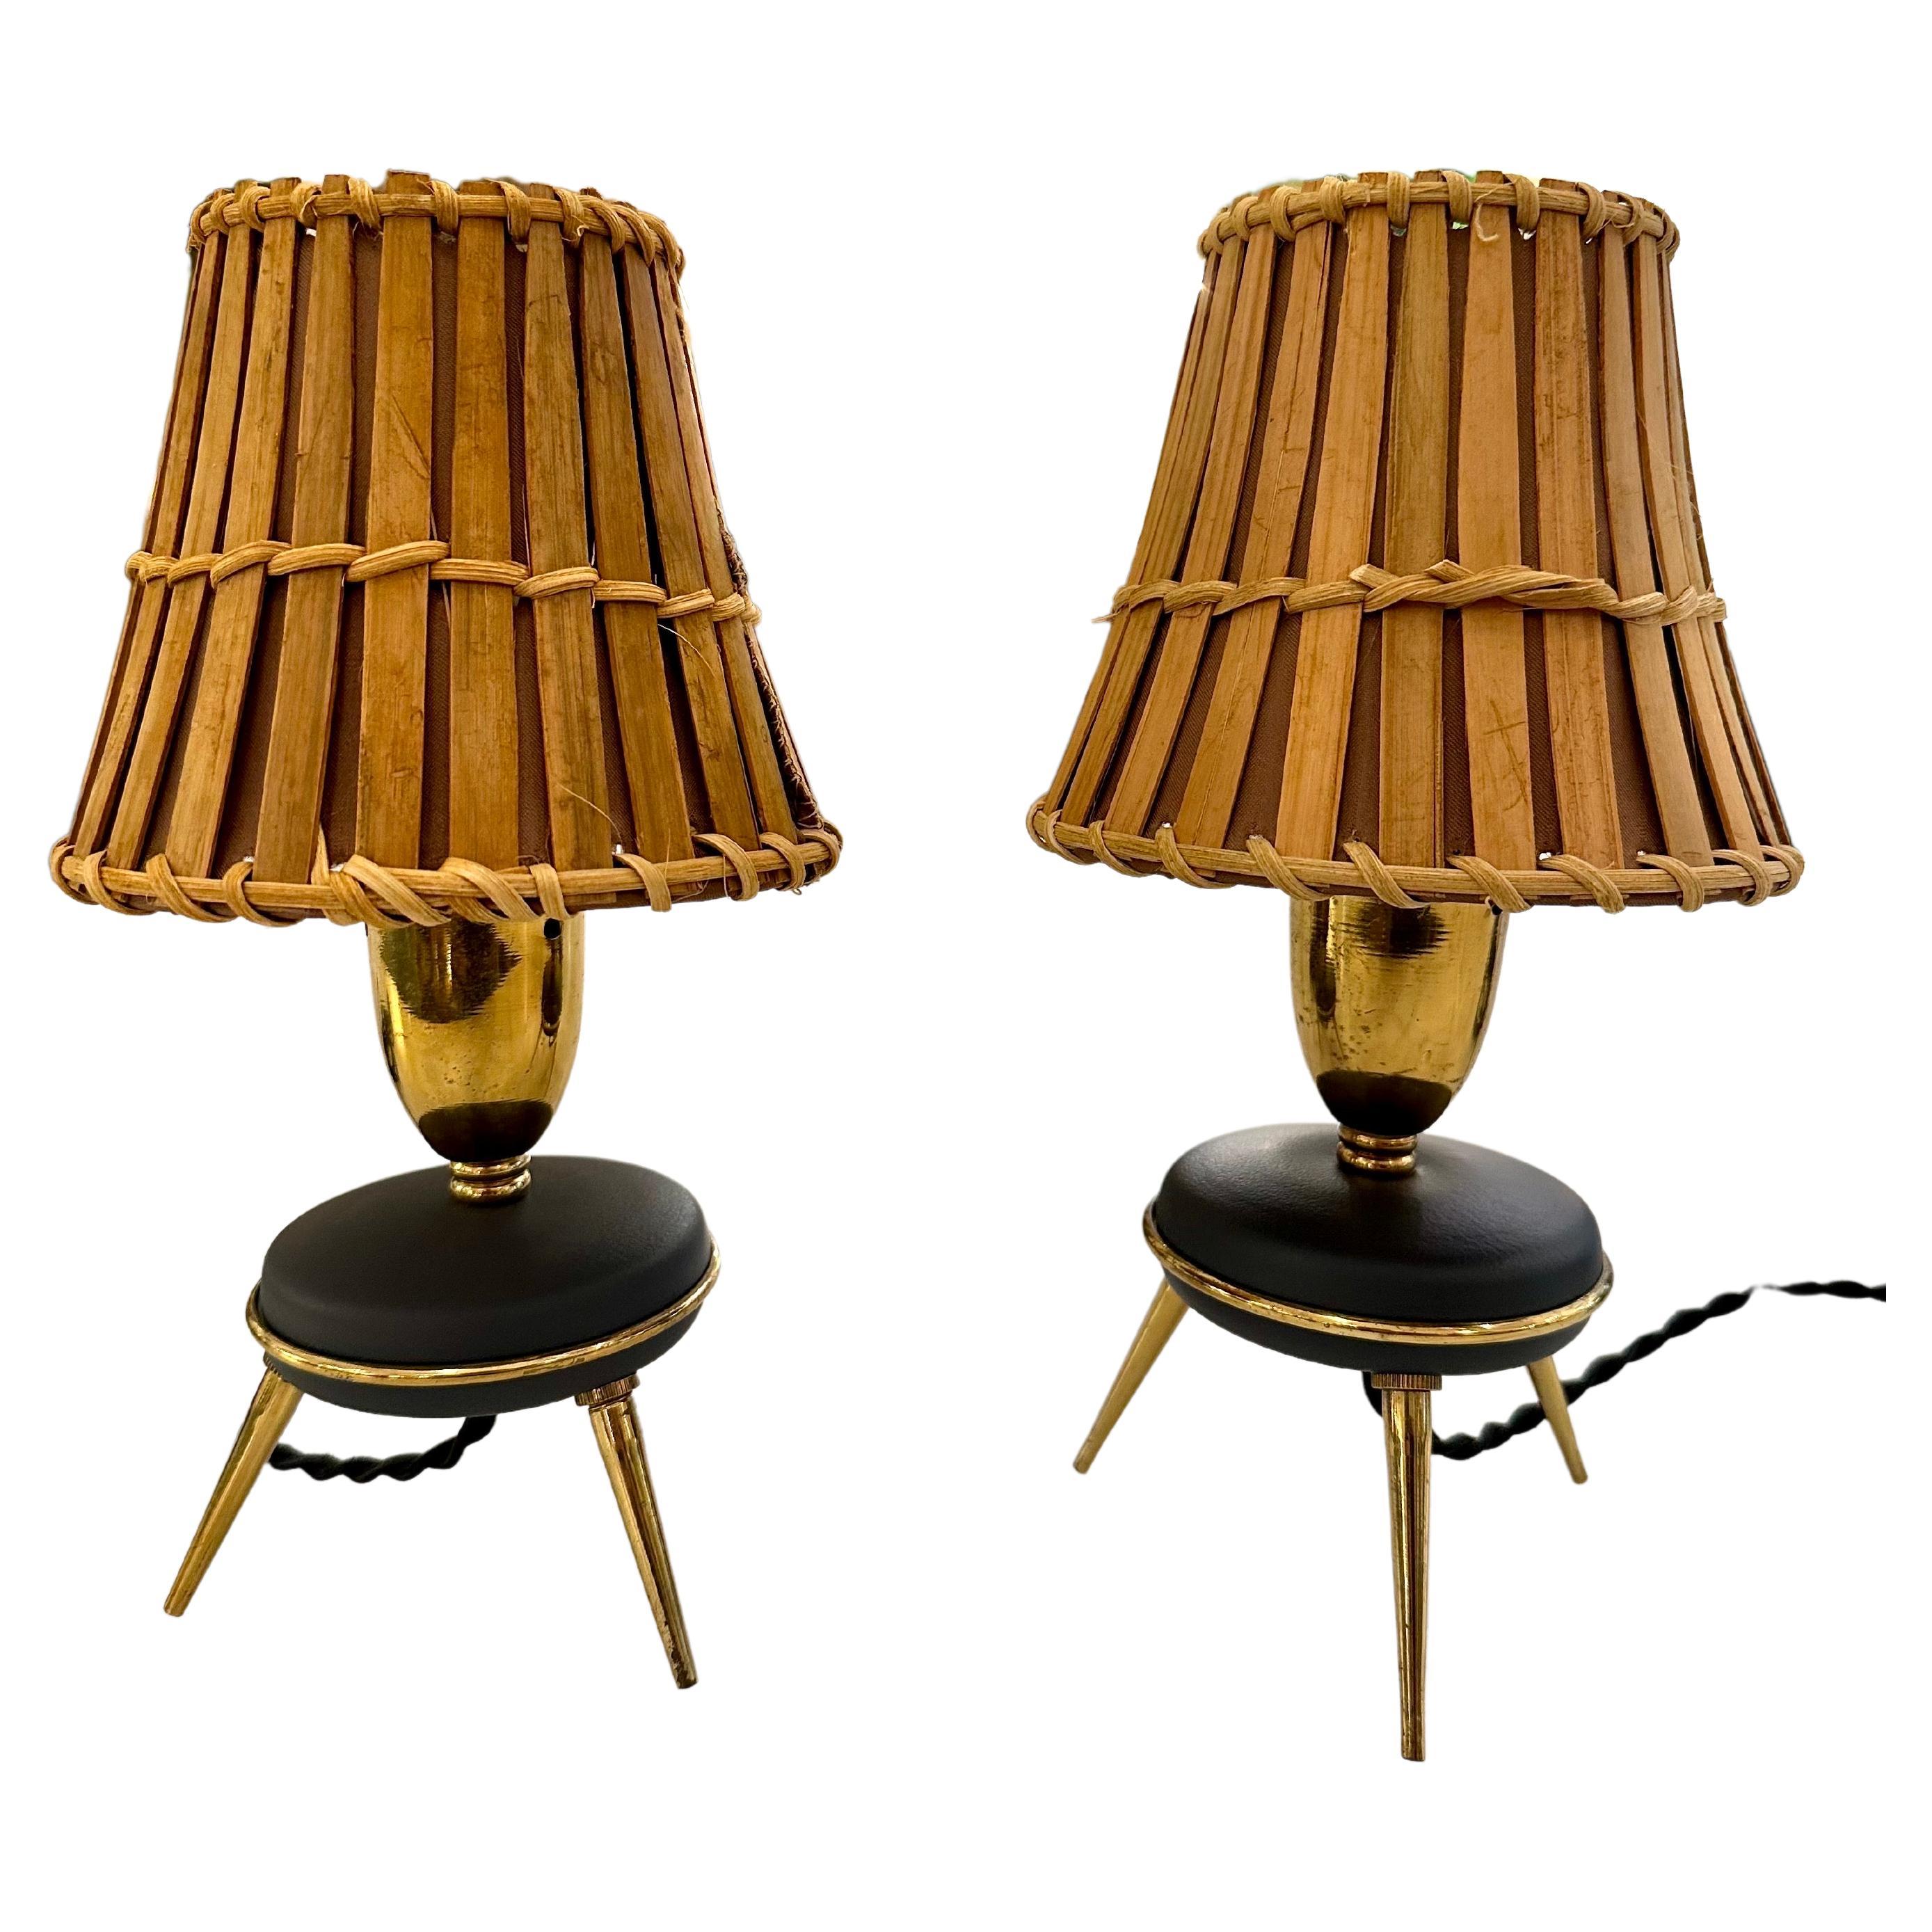 Pair of Vintage Petite Sputnik Table Lamps w/ Rattan Shades